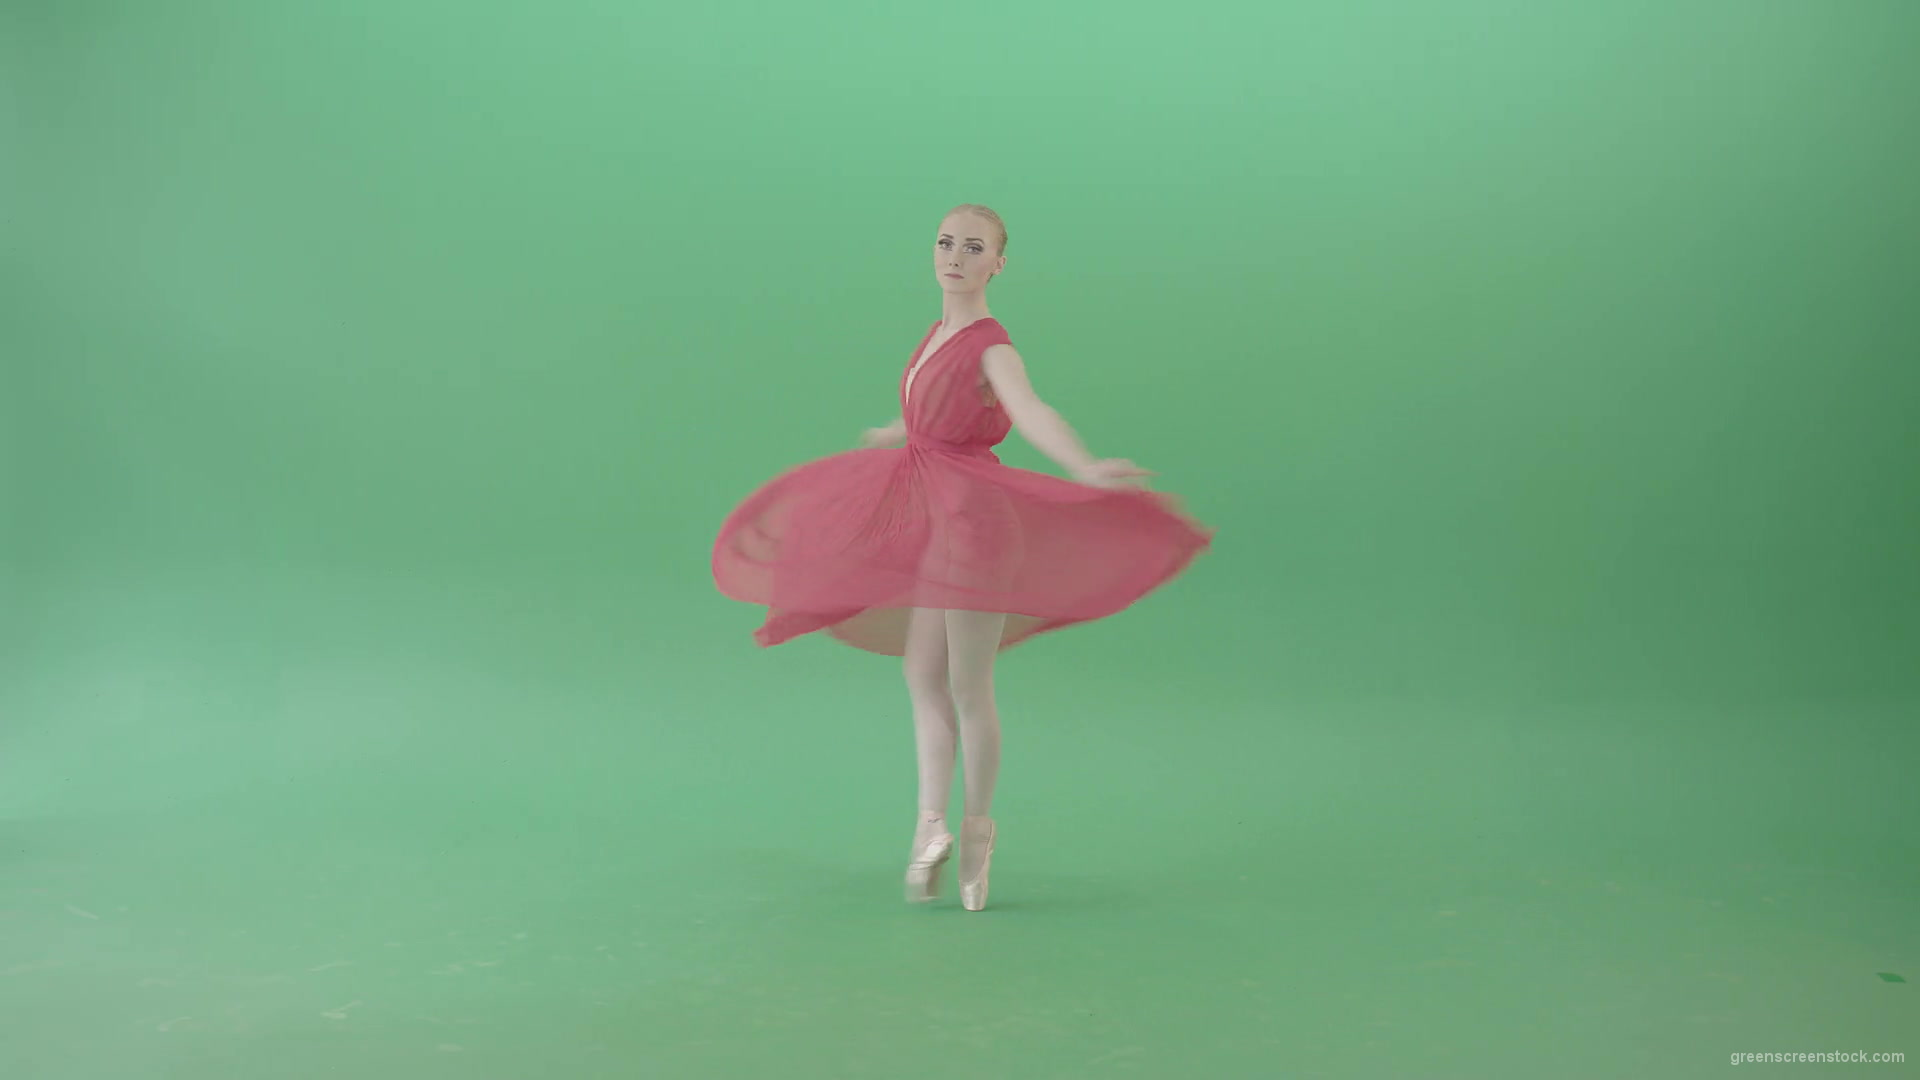 Light-Ballet-dancing-girl-in-red-wind-dress-spinning-on-green-screen-4K-Video-Footage-1920_002 Green Screen Stock